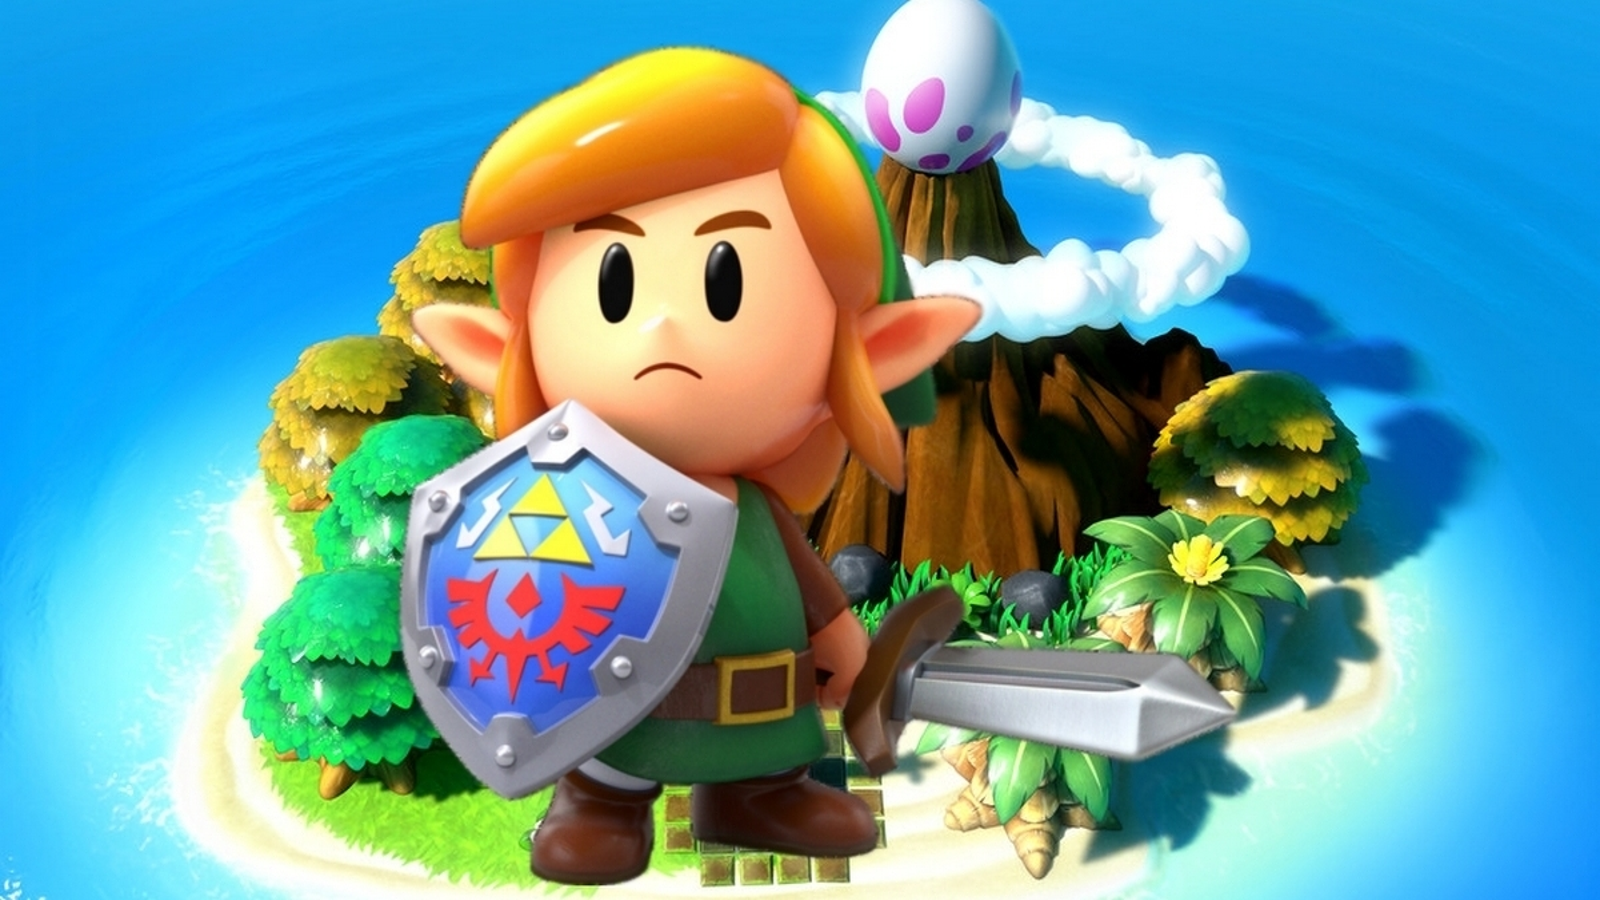 The Legend of Zelda: Link's Awakening Original Soundtrack Game Boy